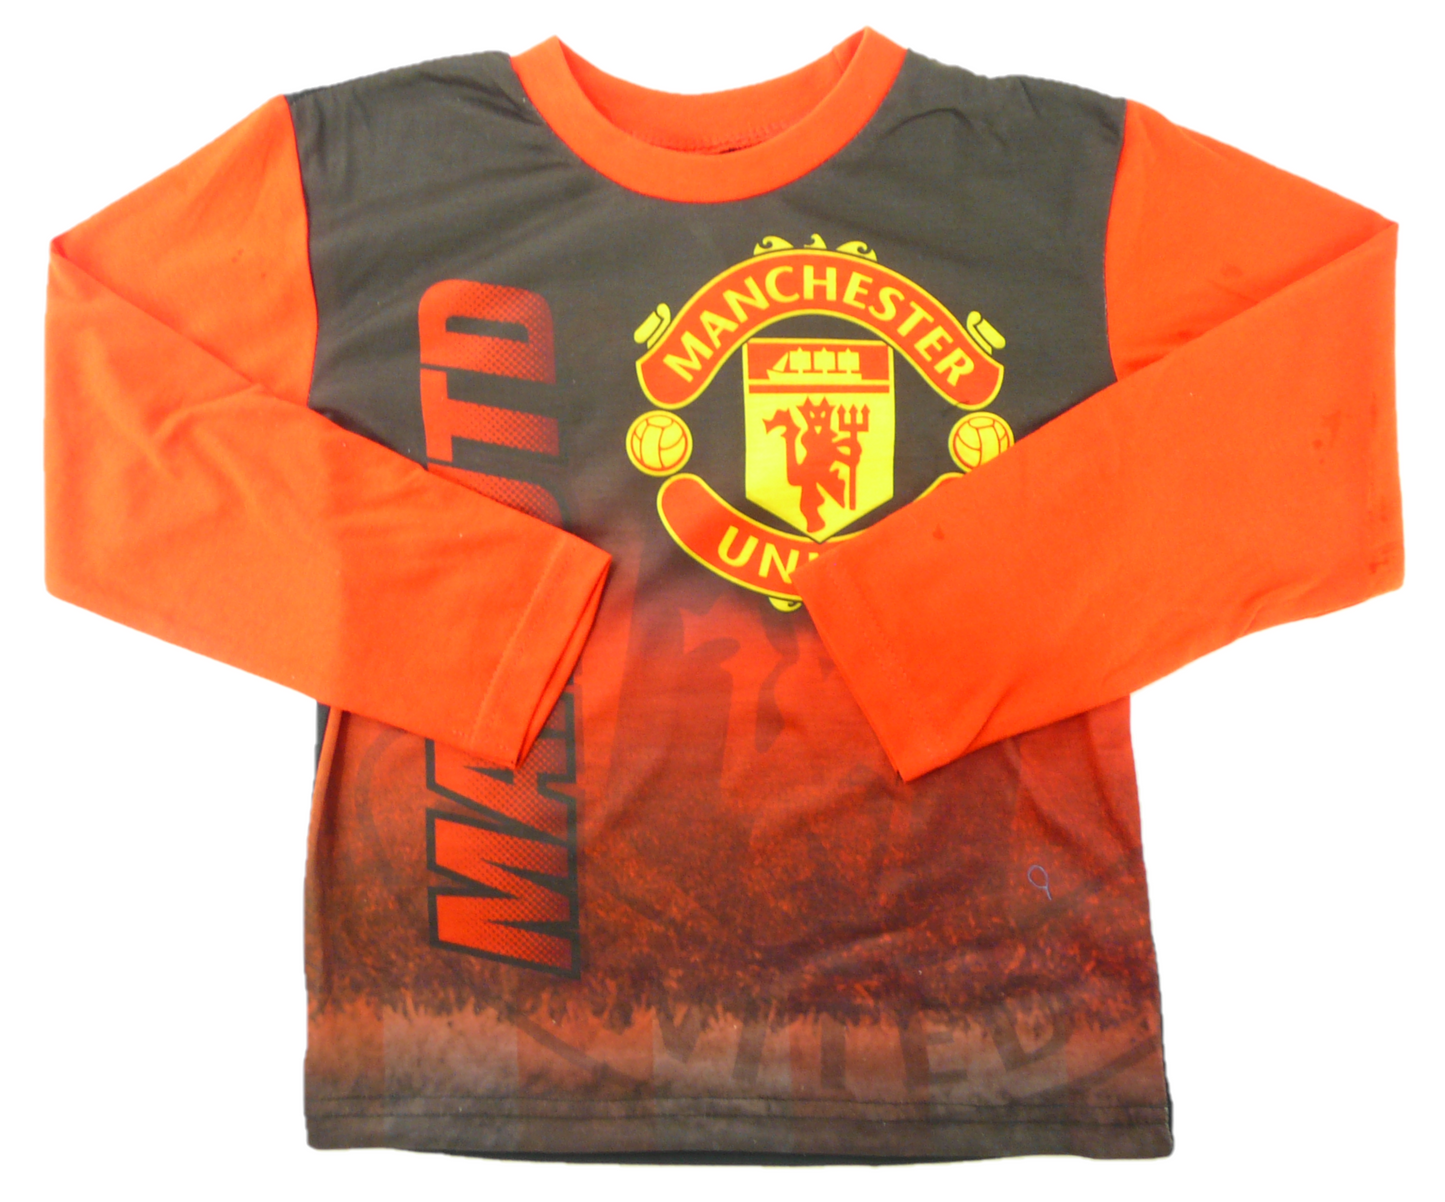 Manchester United Football Club "Red Devils" Boys Pyjamas 4-12 Years